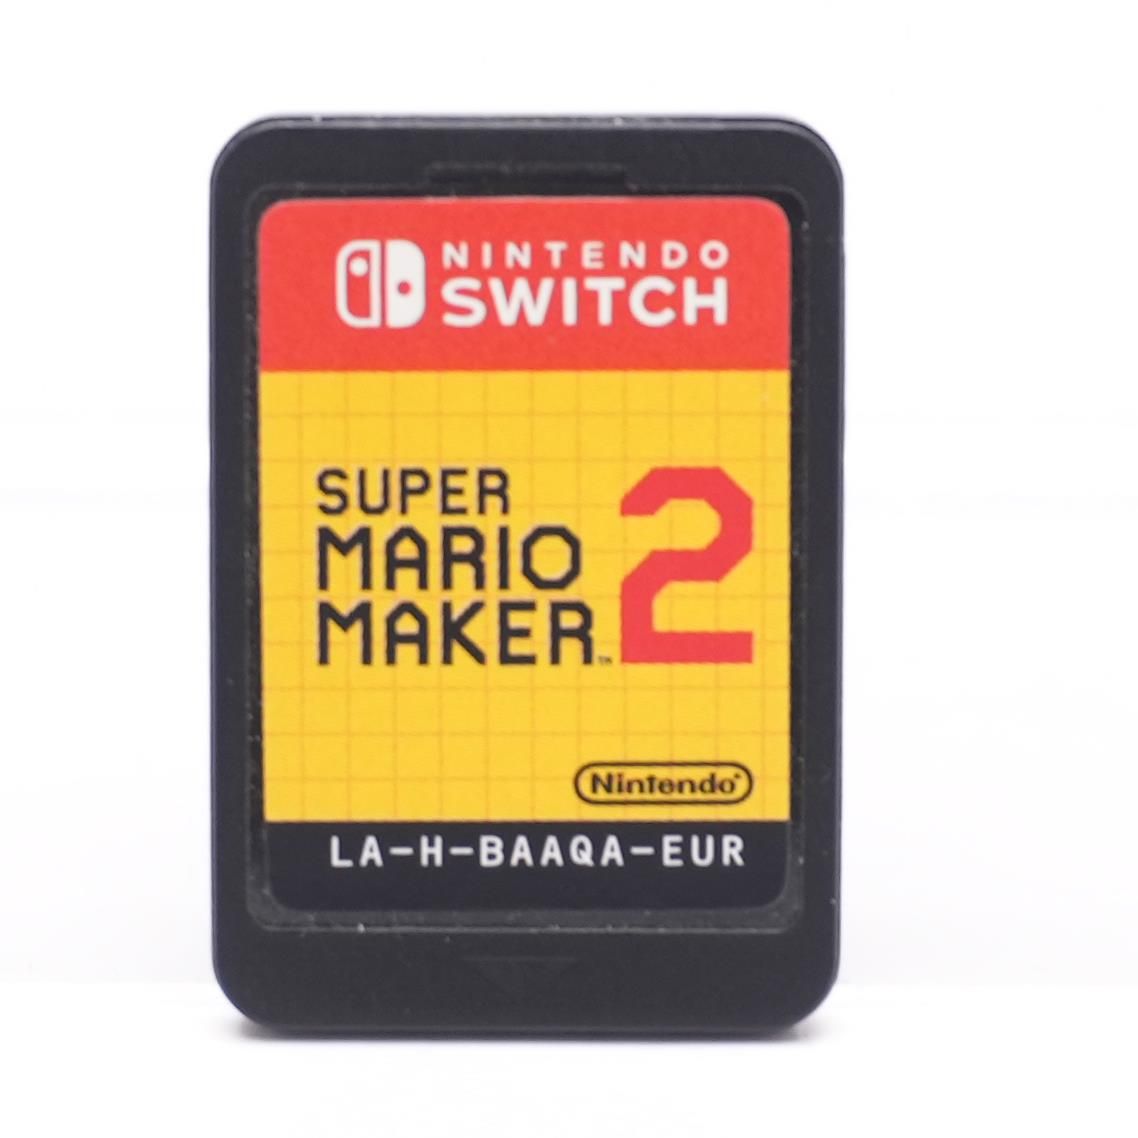 Super Mario Maker 2 – Nintendo Switch Unclaimed Baggage (European Ver.) For